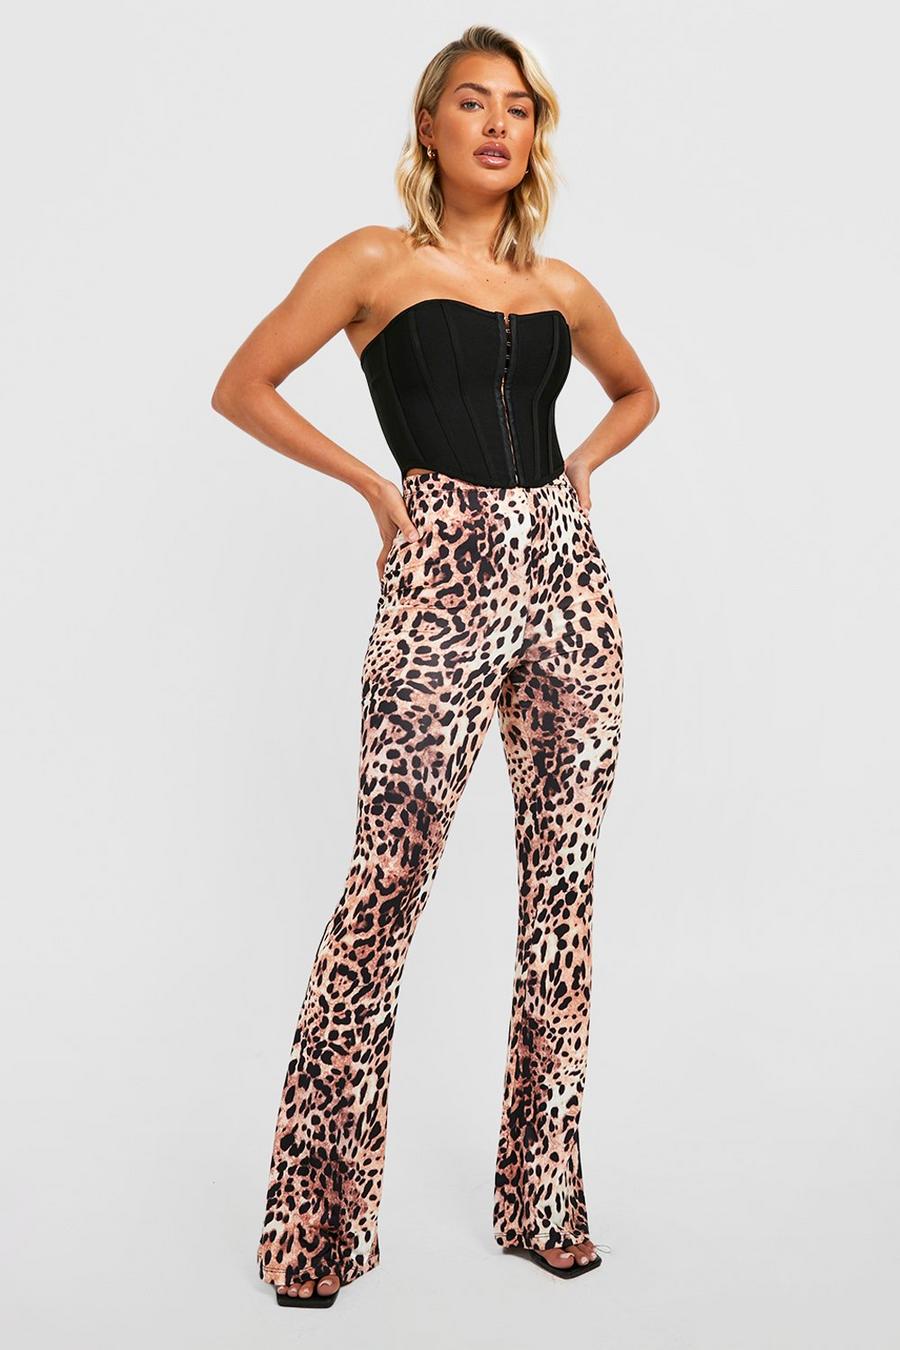 Tan brown Leopard Print Slinky Flared Trousers